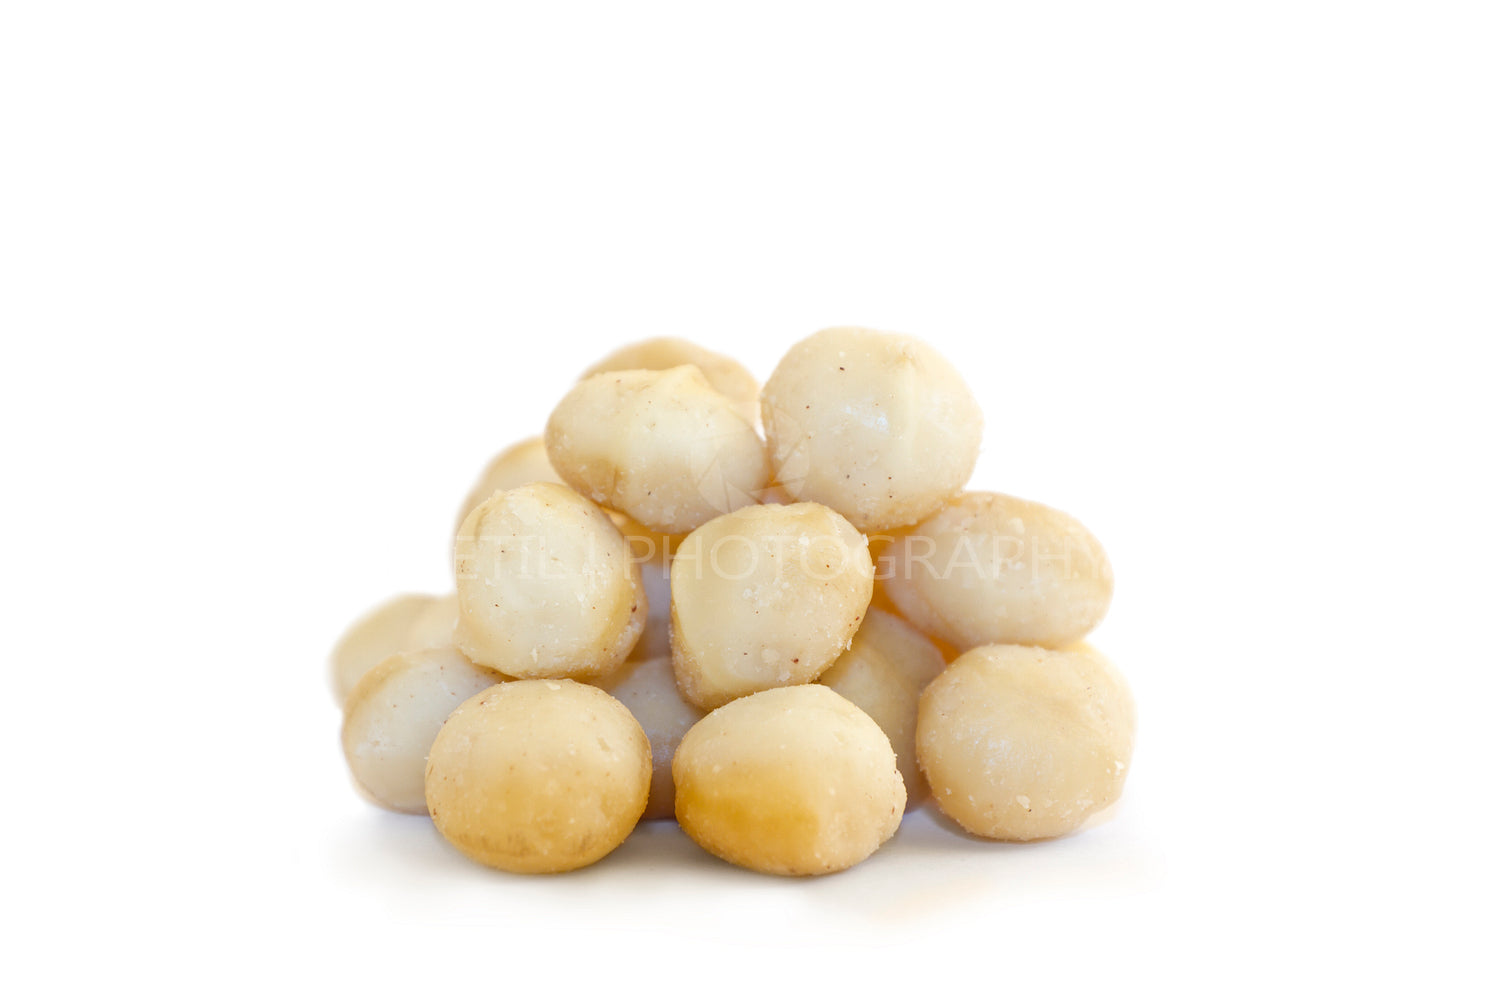 Organic Macadamia Nuts